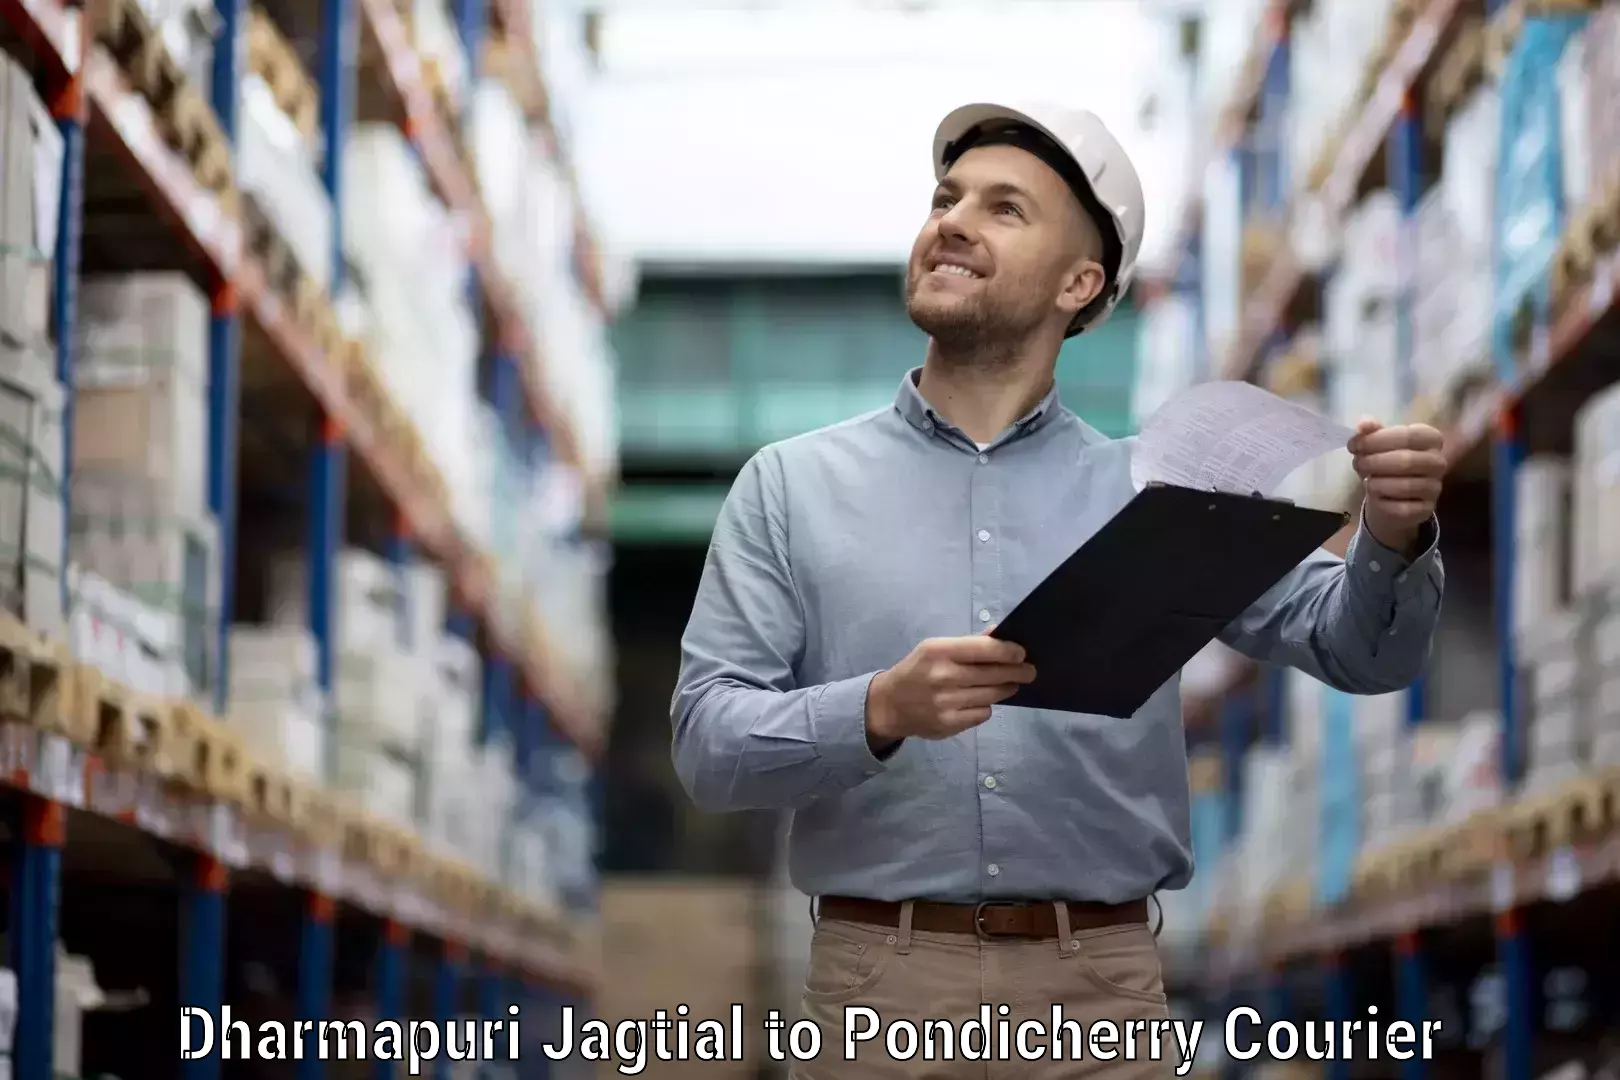 Nationwide courier service Dharmapuri Jagtial to Pondicherry